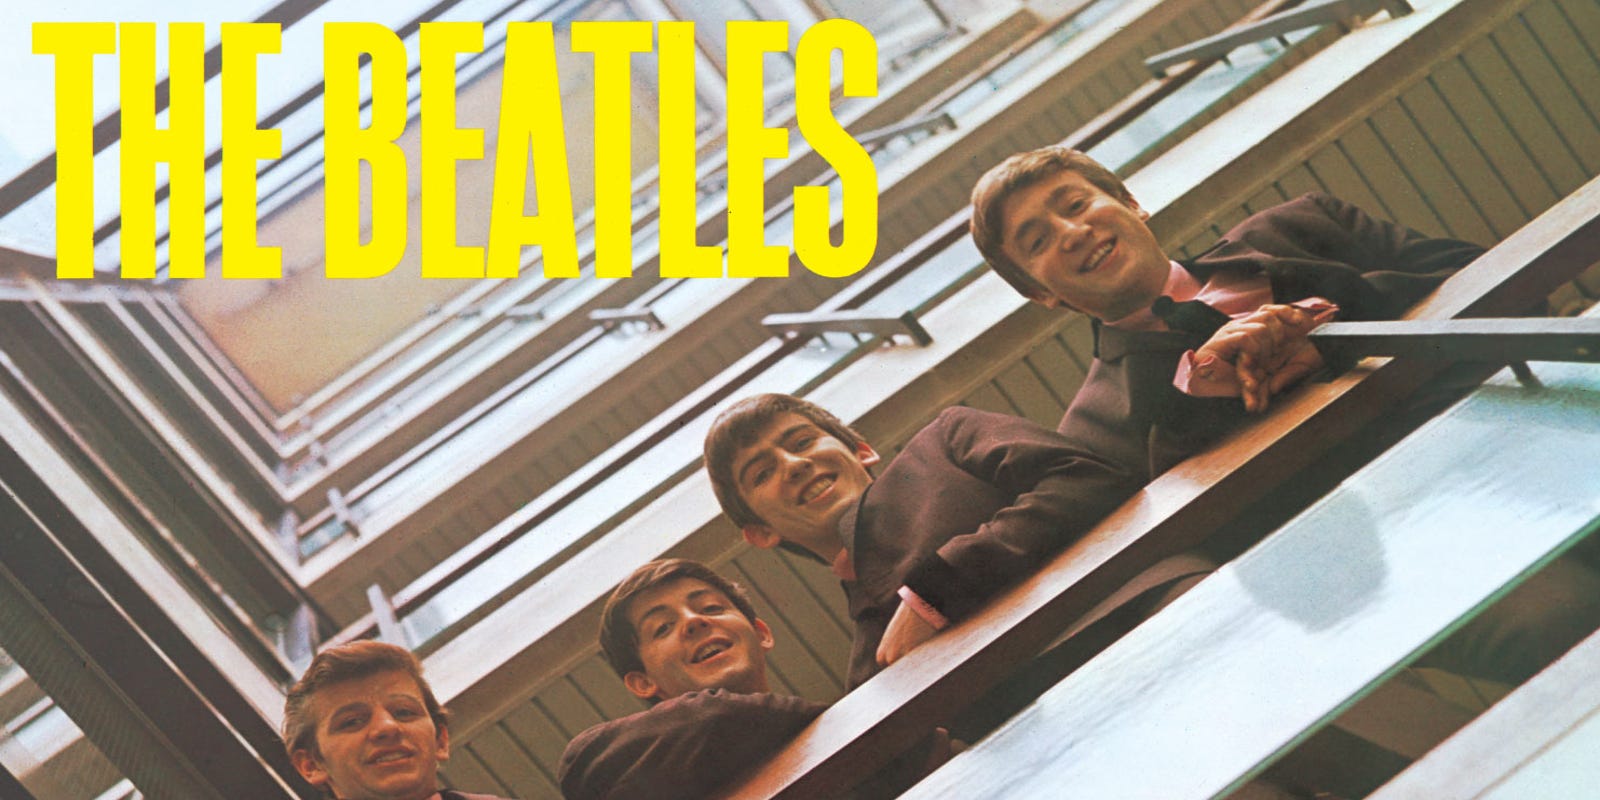 The Beatles Debut Album Please Please Me Was Released - vrogue.co